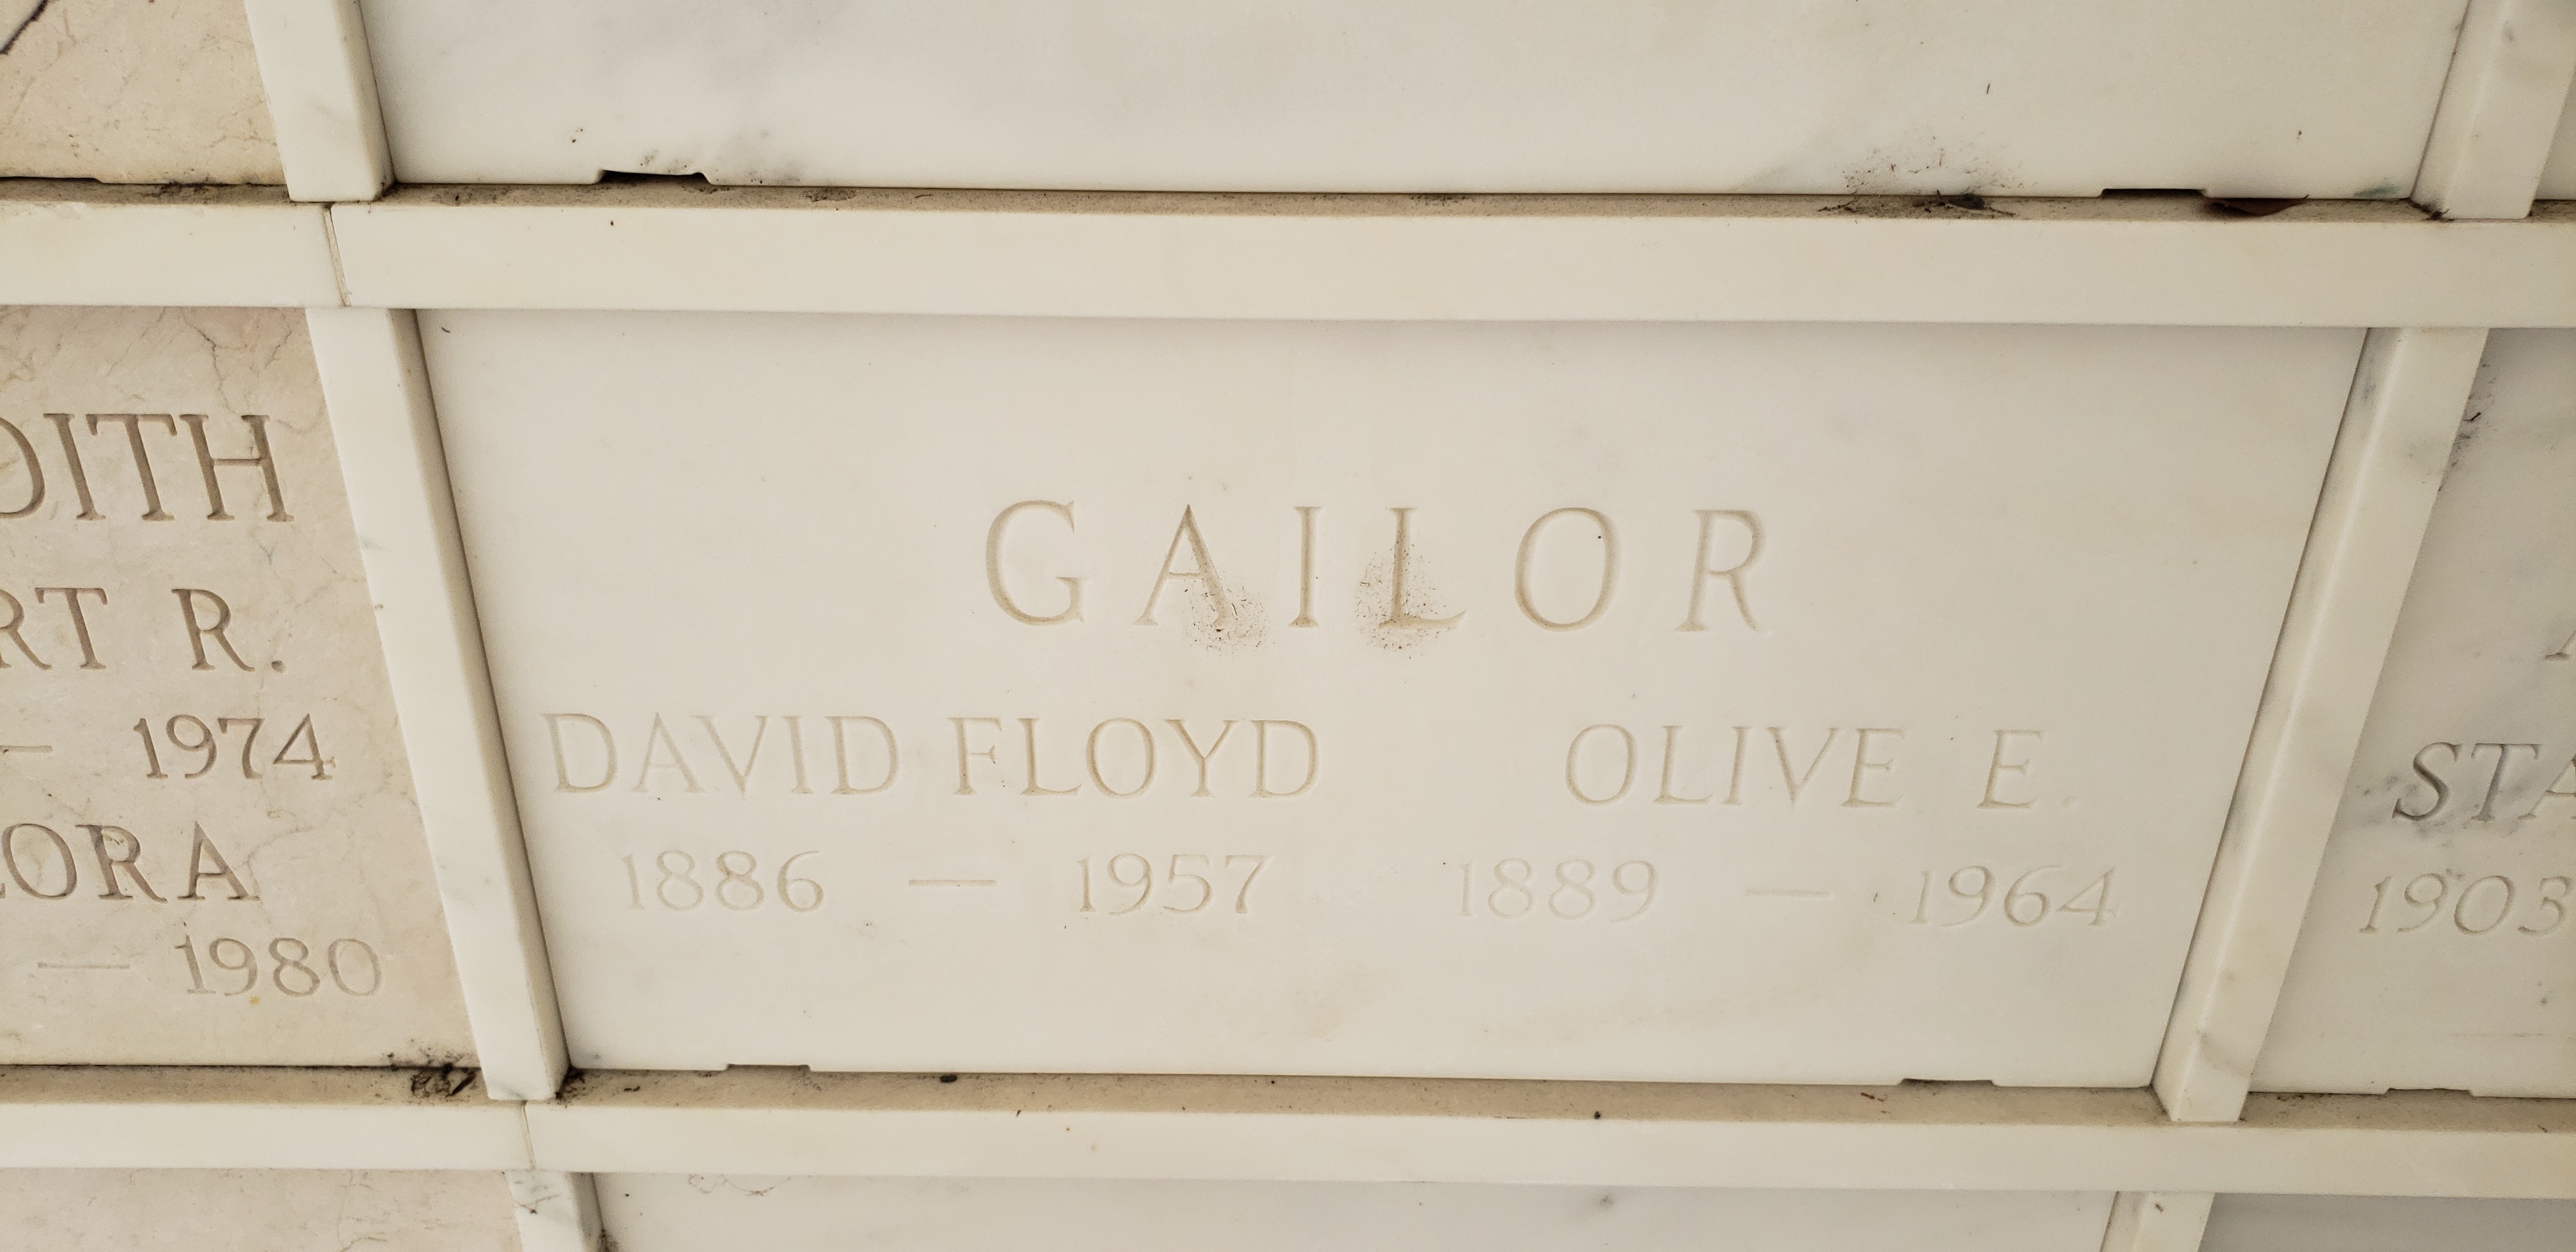 David Floyd Gailor